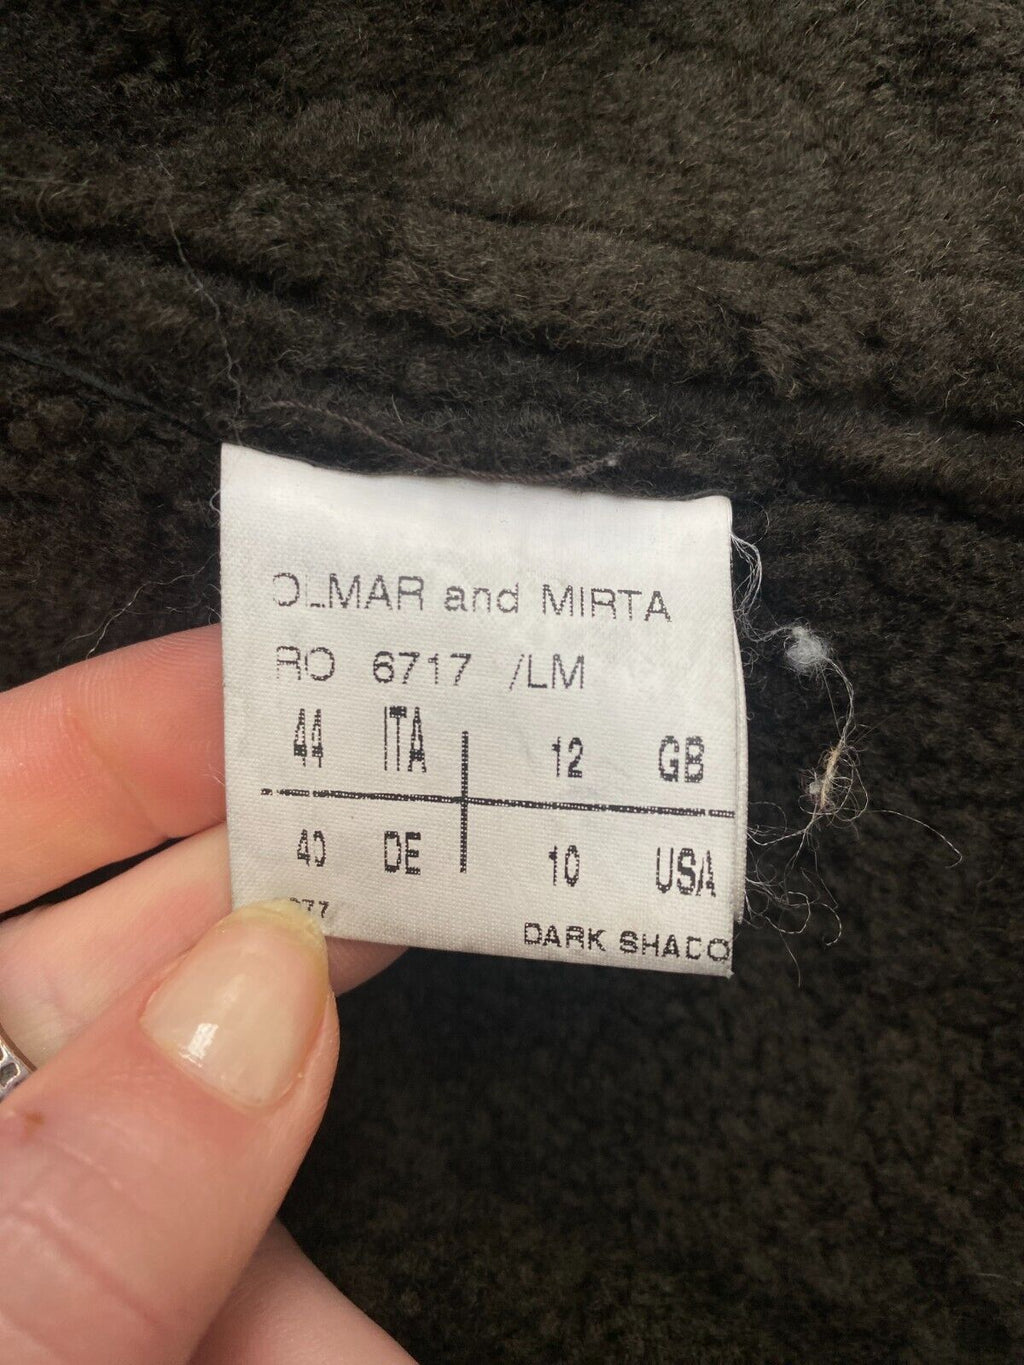 Blistered Black Shearling Jacket